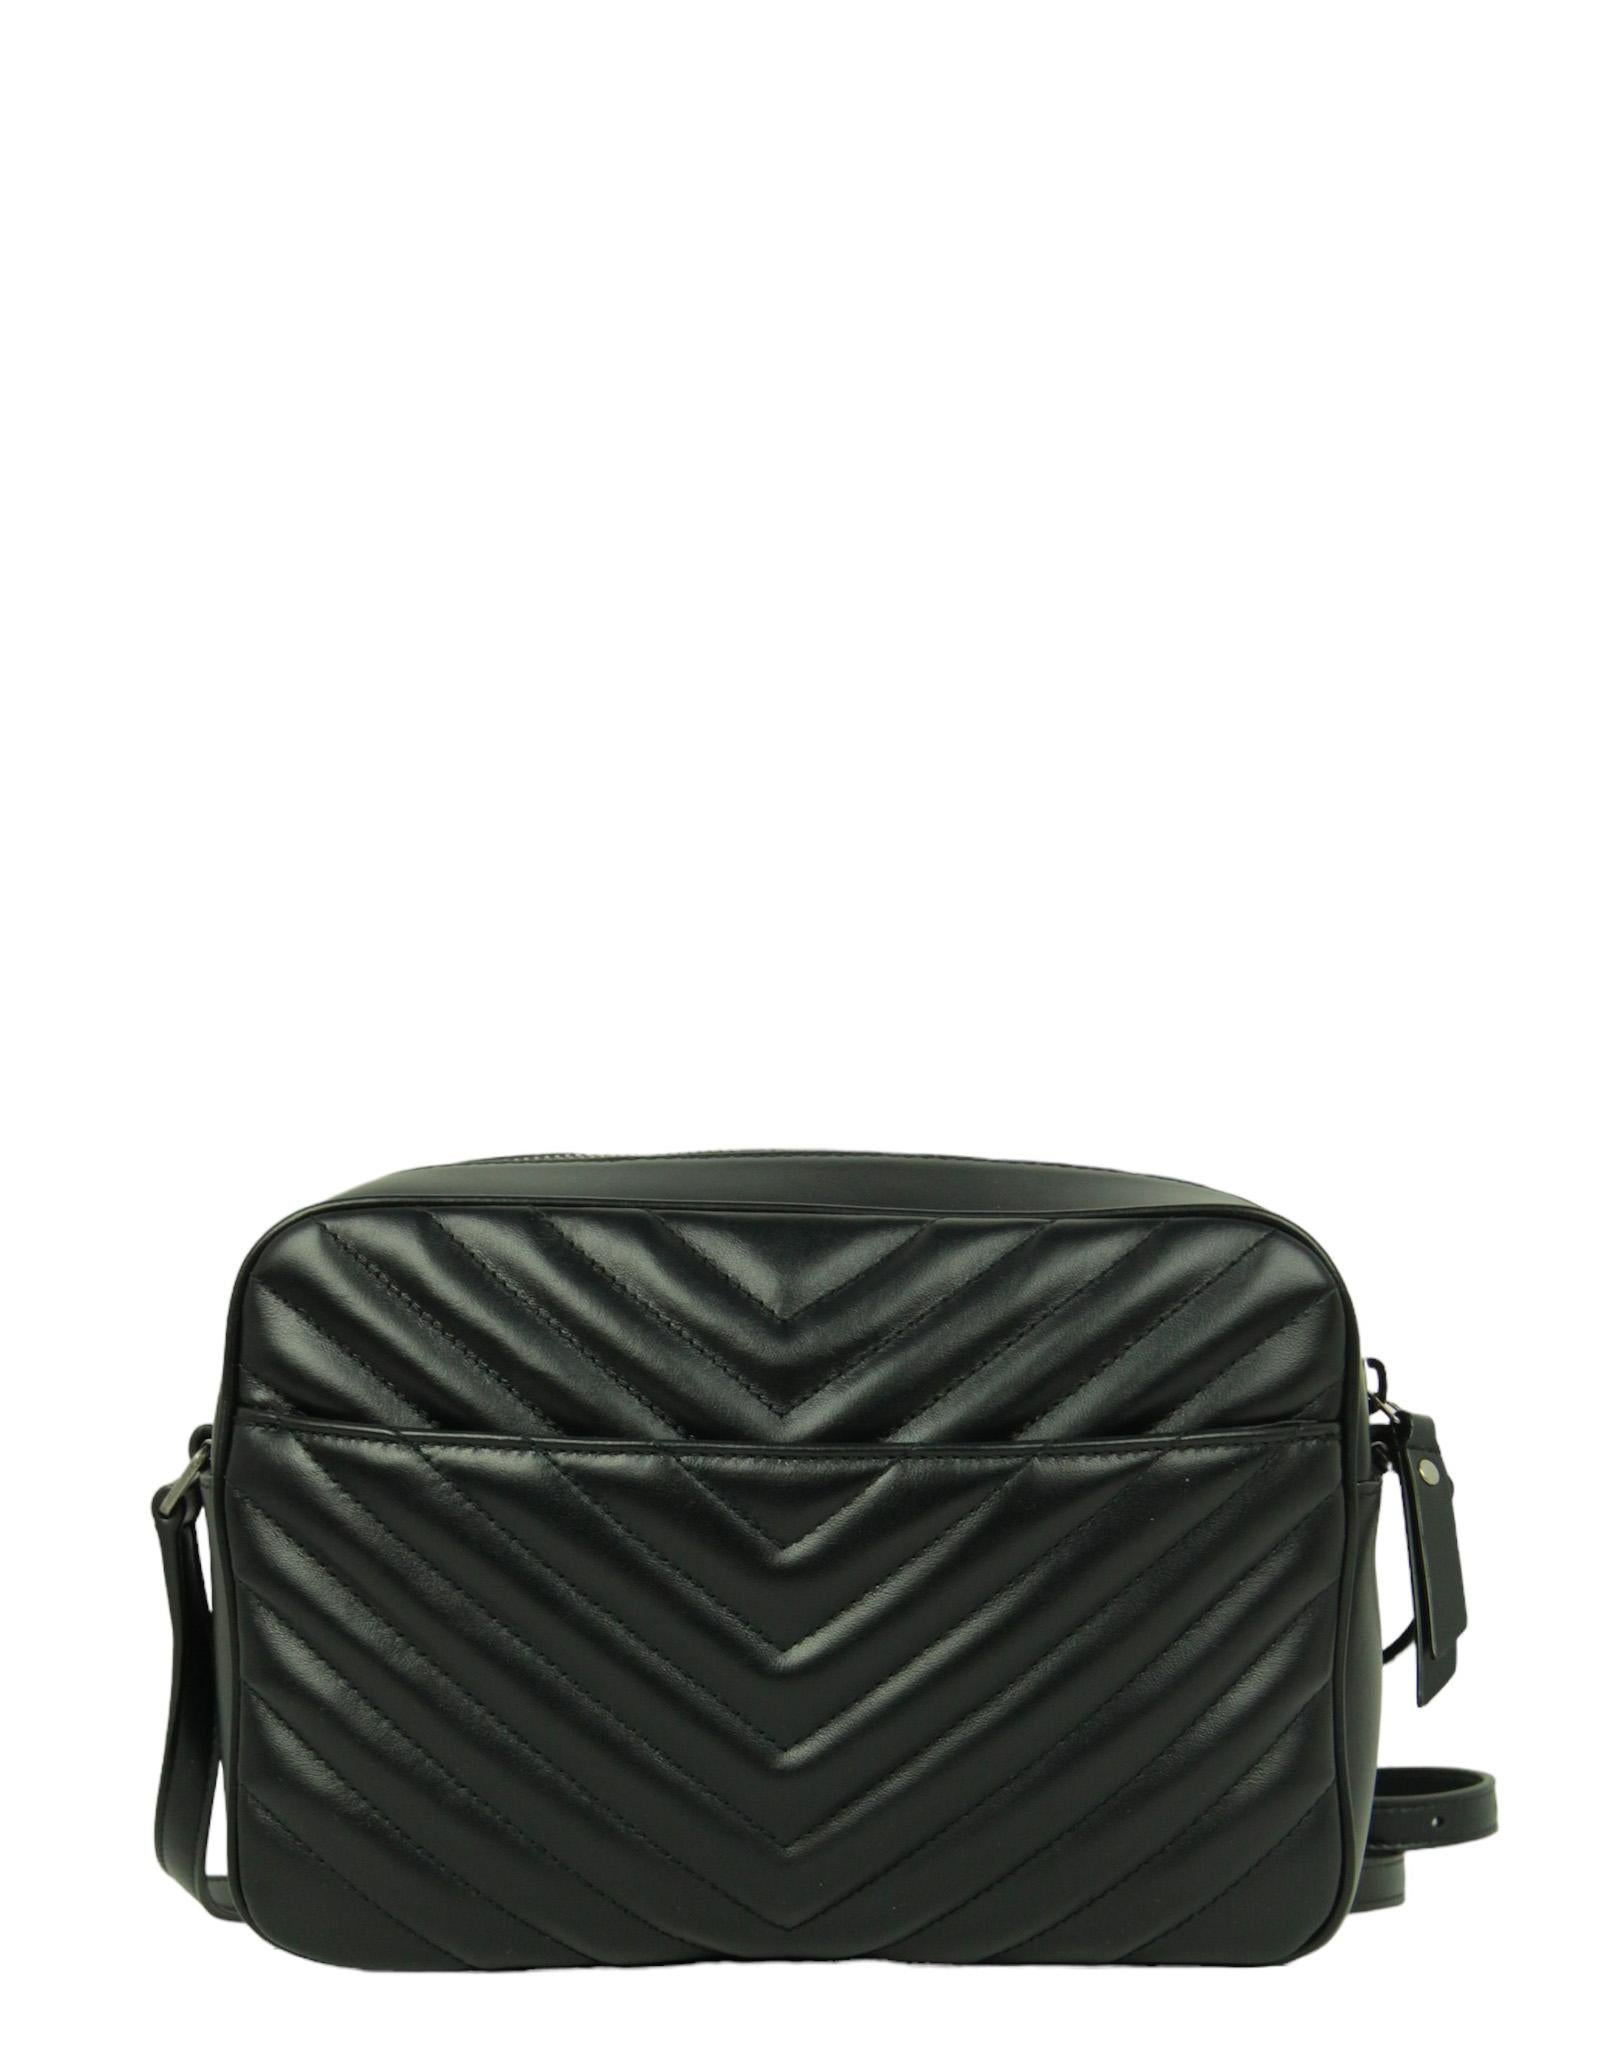 Saint Laurent Black Calfskin Matelasse Monogram Lou Camera Bag In Excellent Condition For Sale In New York, NY